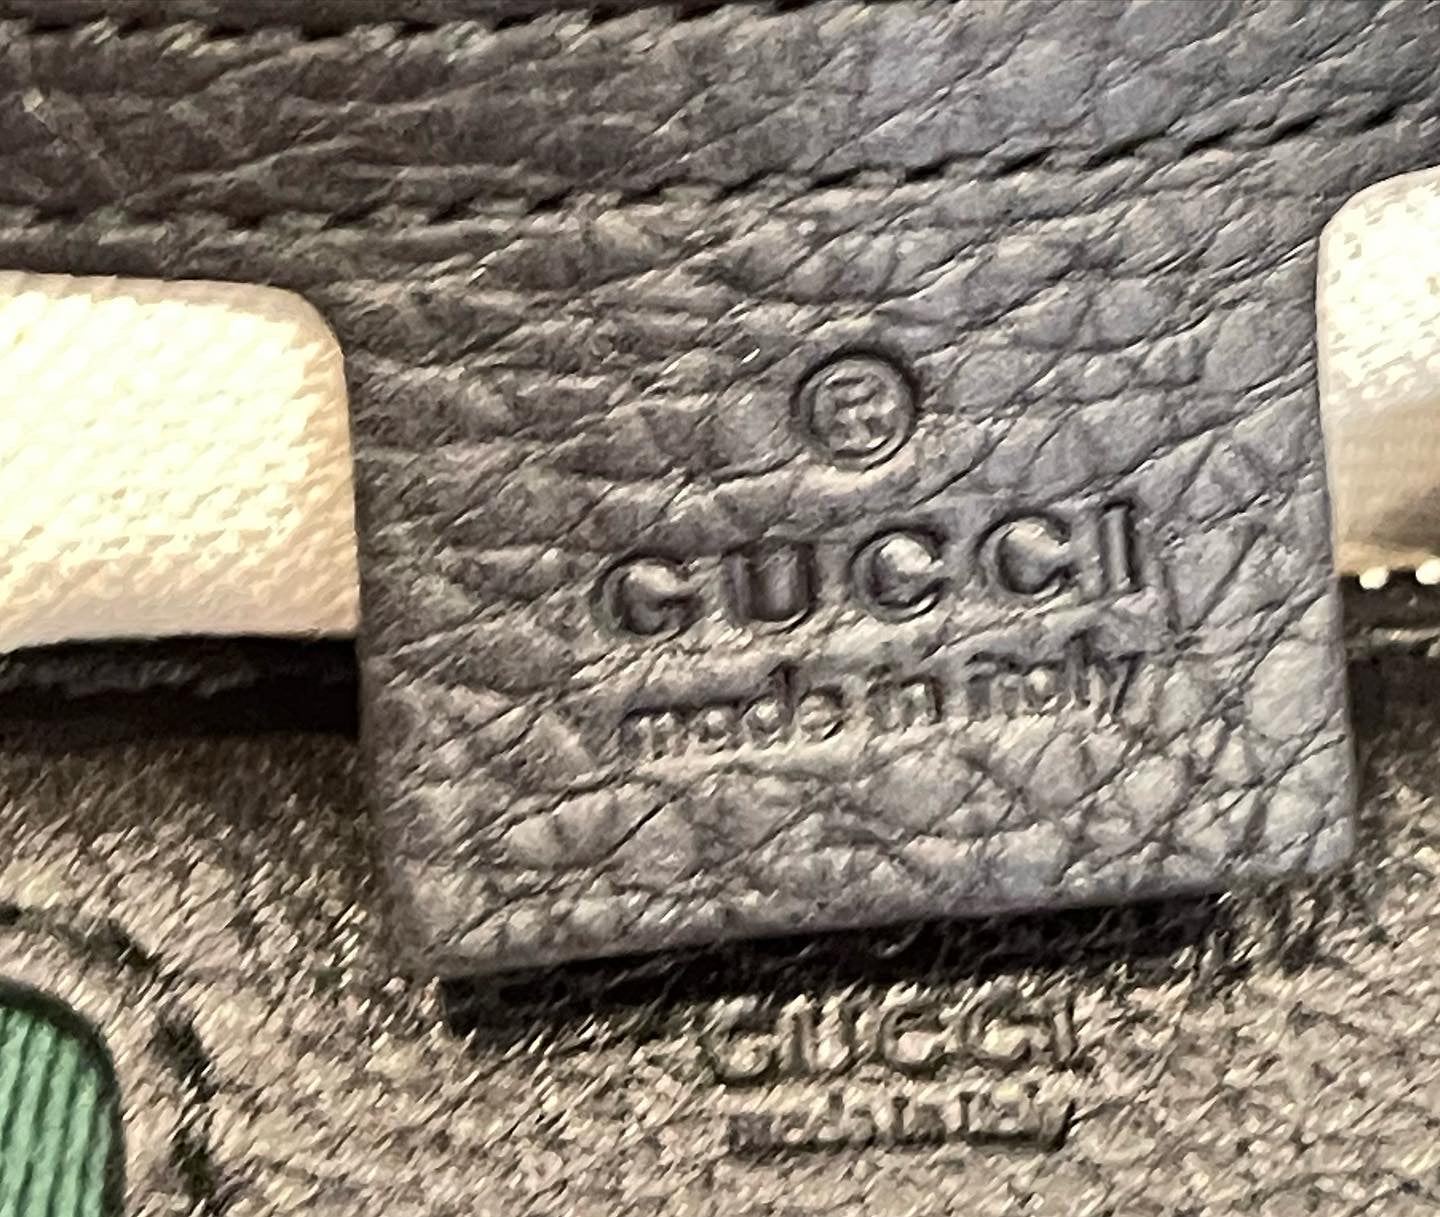 Gucci Boston Duffle Bag